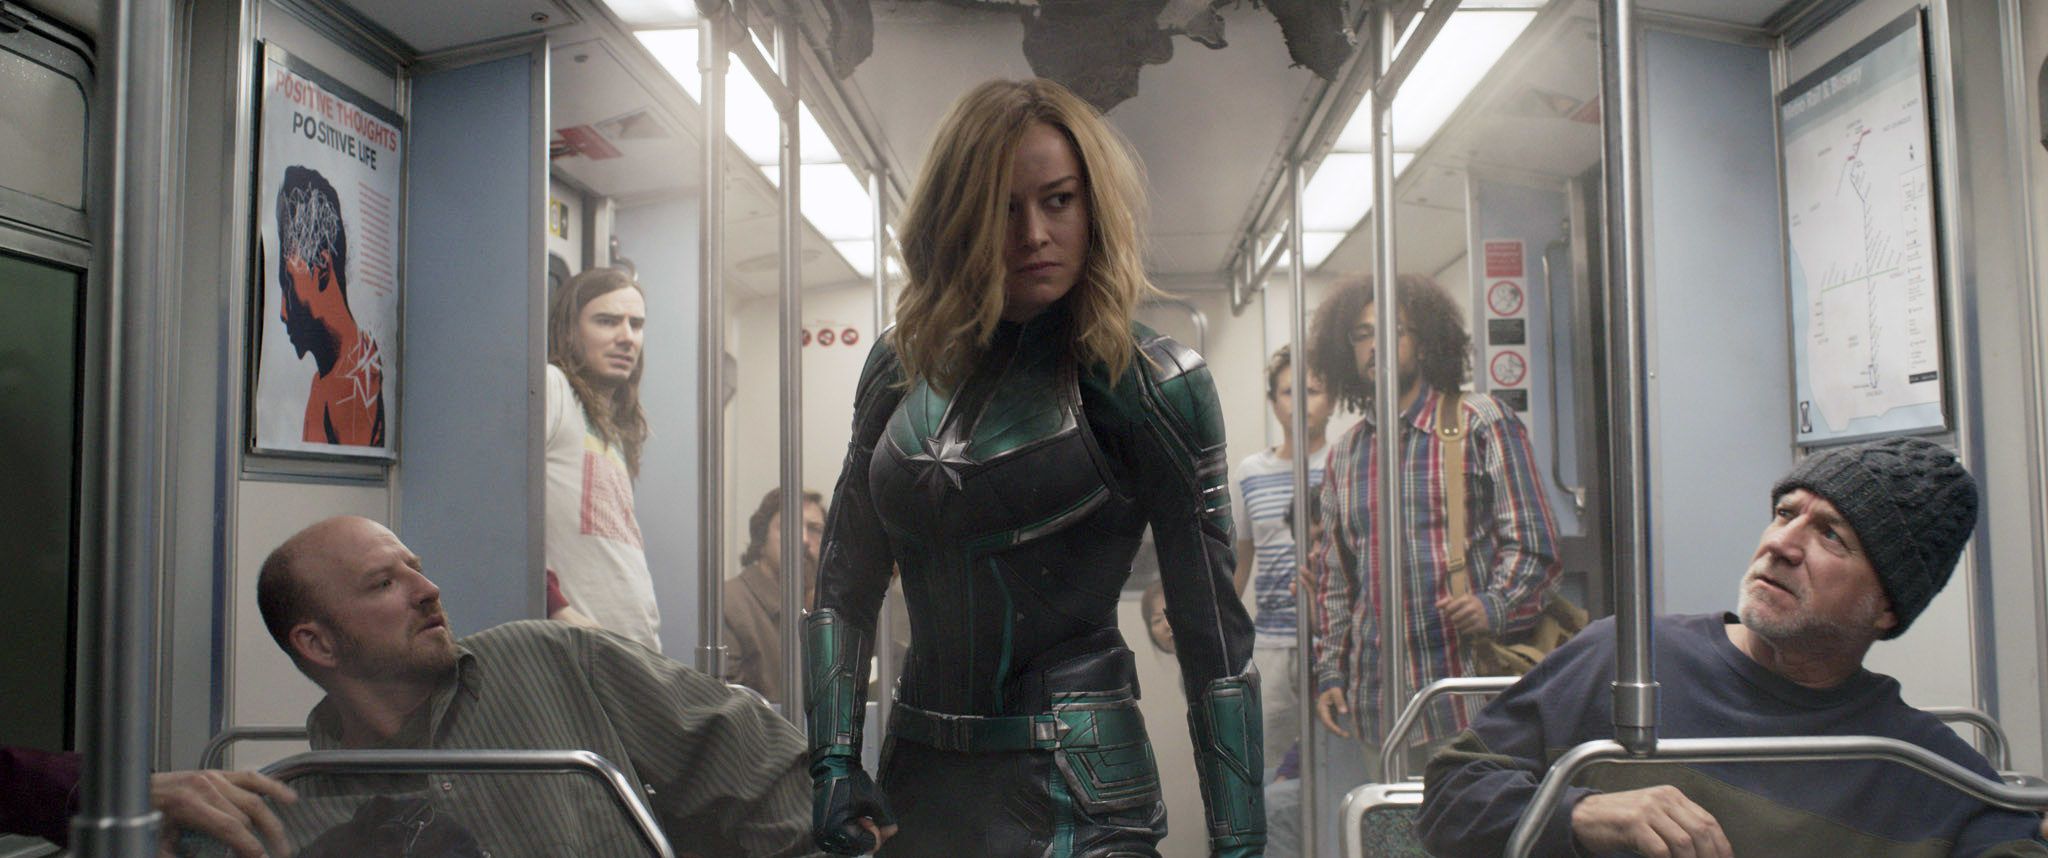 Captain Marvel on a subway